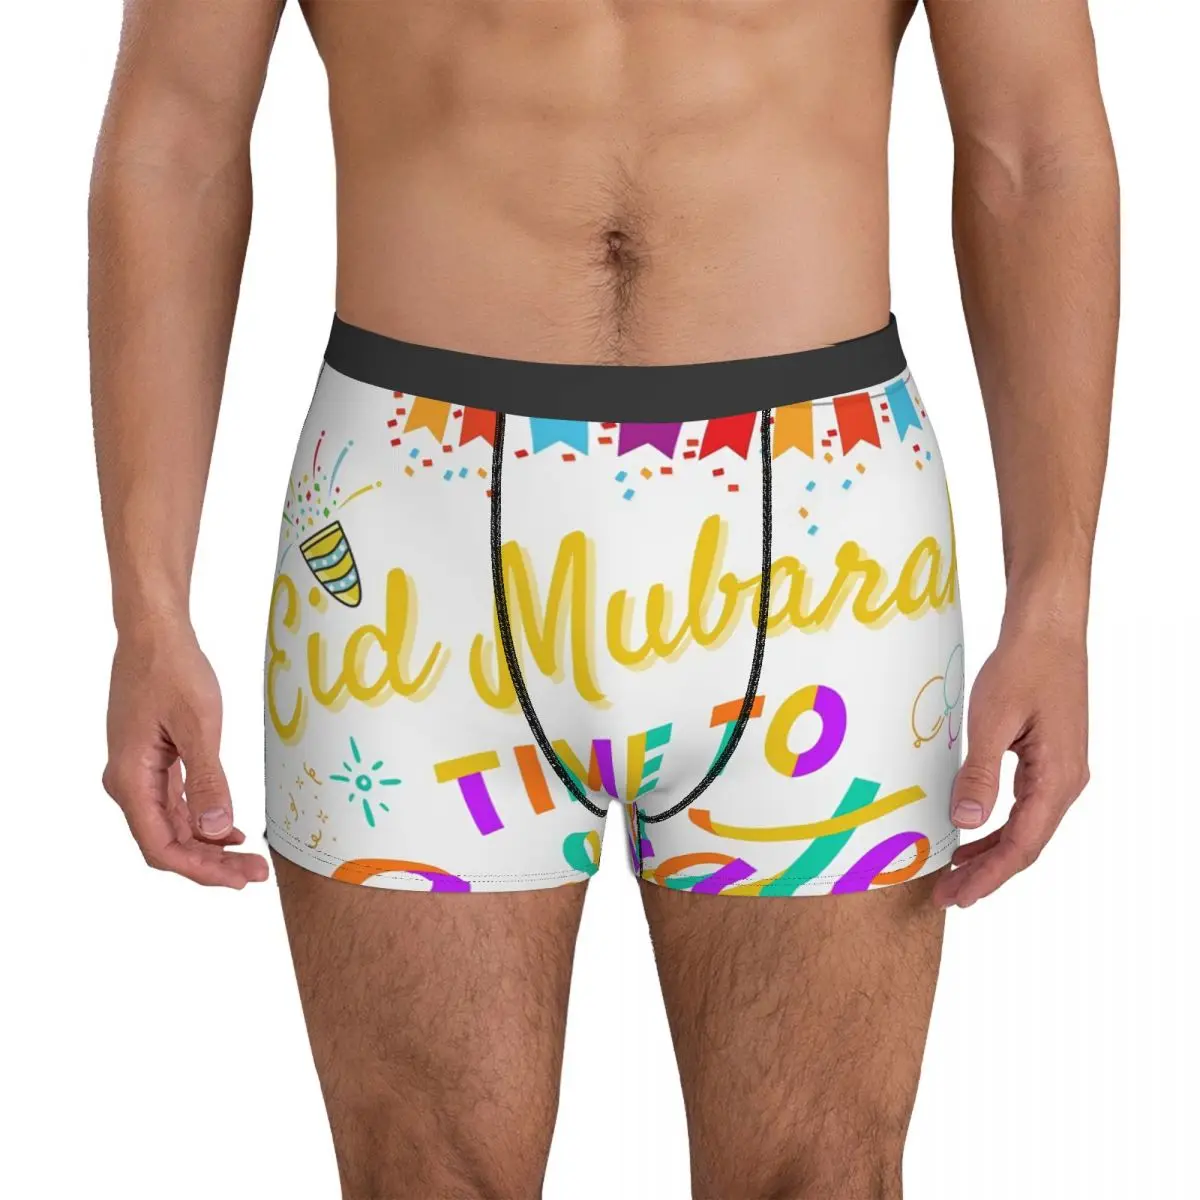 Eid Mubarak Underwear Time to Celebrate Funny Panties Printed Shorts Briefs Pouch Men's Plus Size Boxershorts